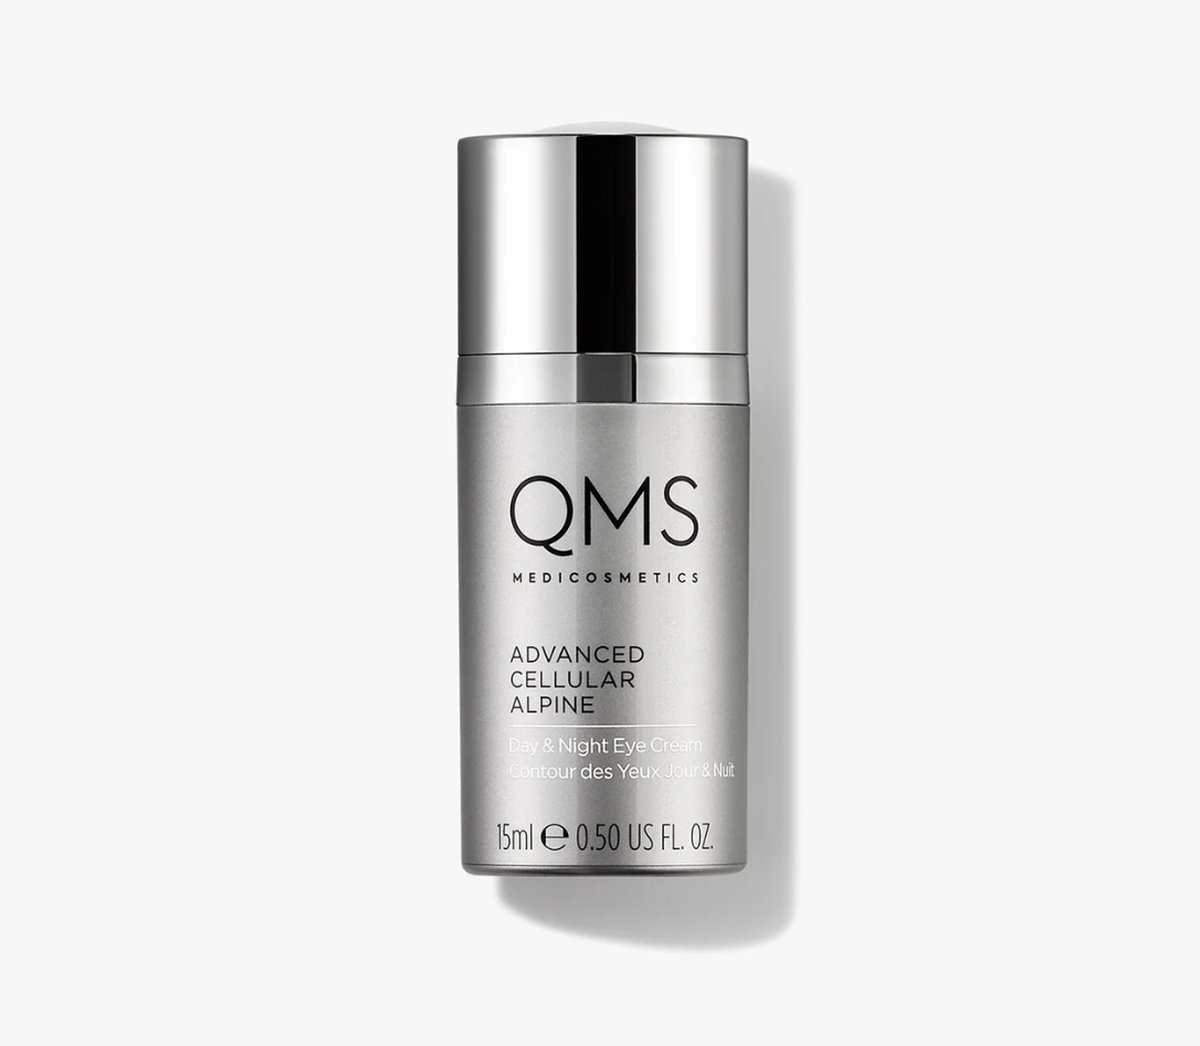 QMS Advanced Cellular Alpine Day & Night Eye Cream 15ml + 2 Gratis QMS samples